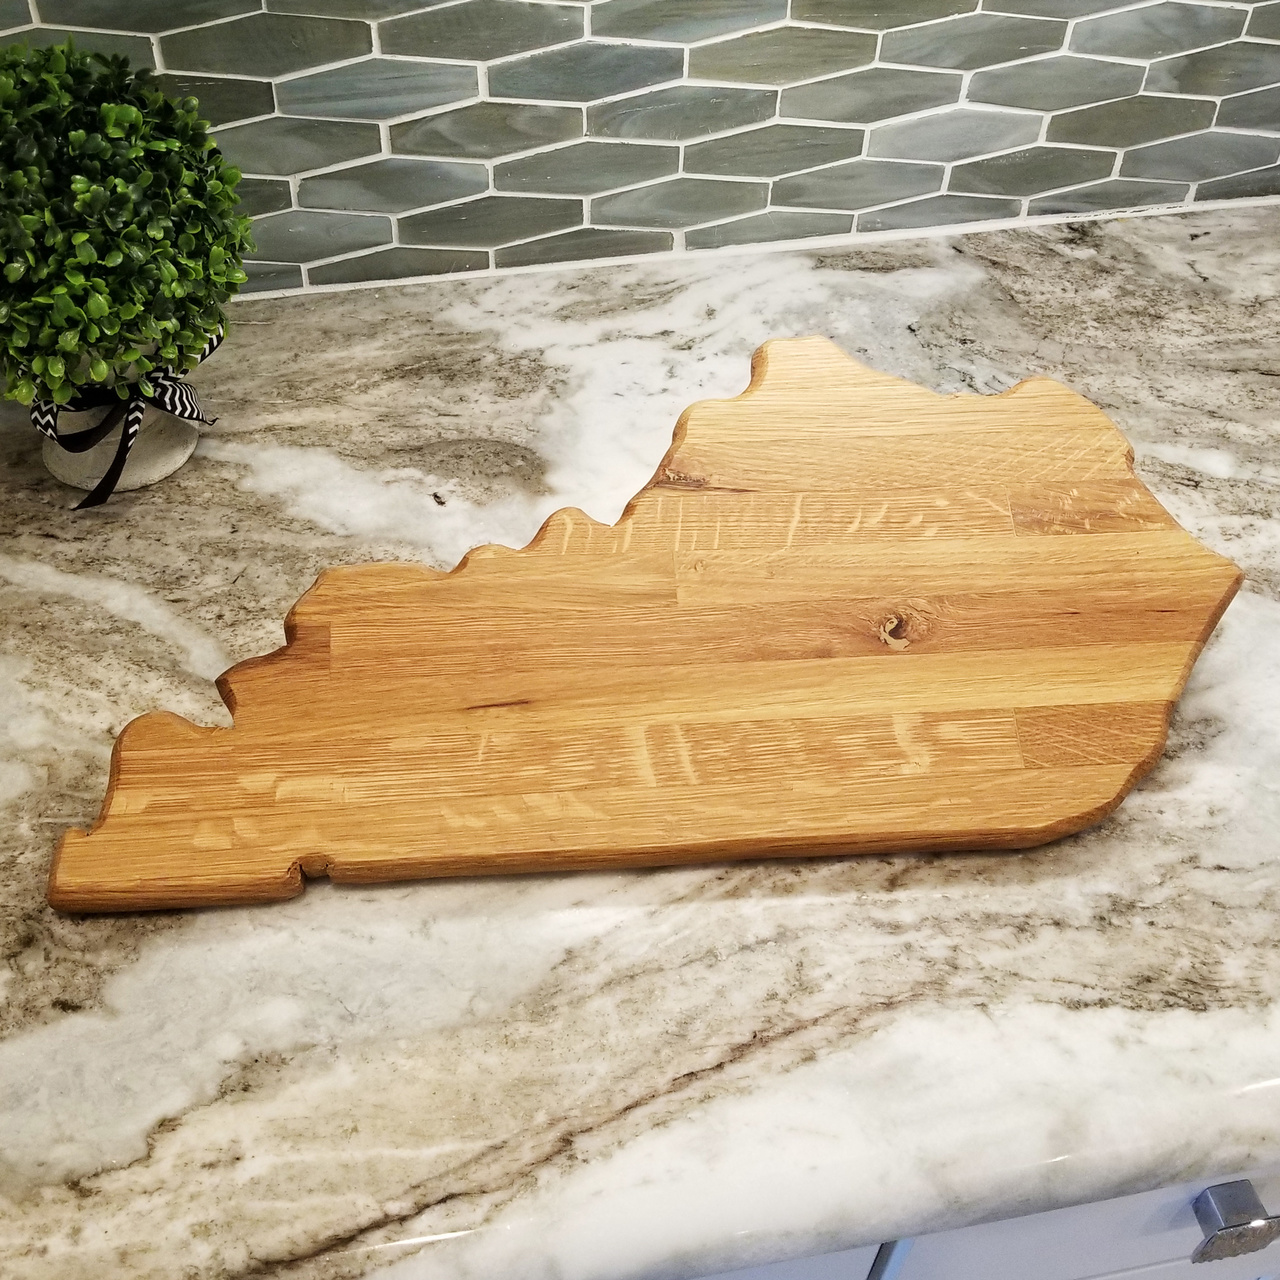 Appalachian Mountain Crafts Pig Cutting Board - A Taste of Kentucky